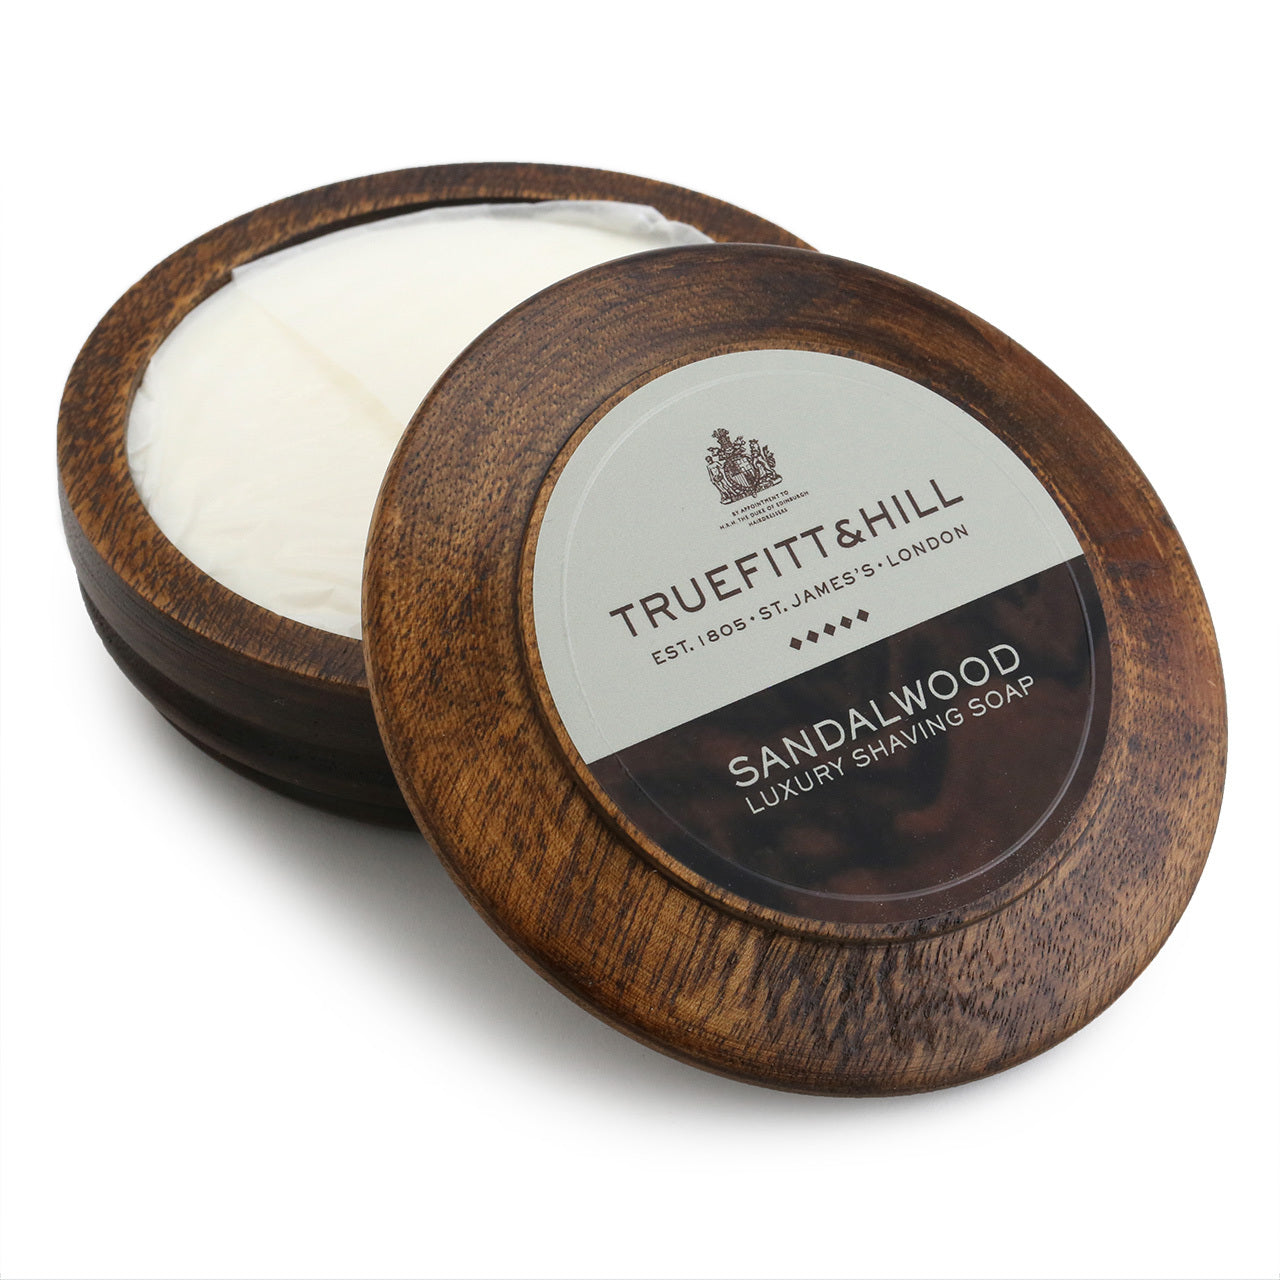 Truefitt & Hill Luxury Shave Soap in Wooden Bowl 99g - Sandalwood